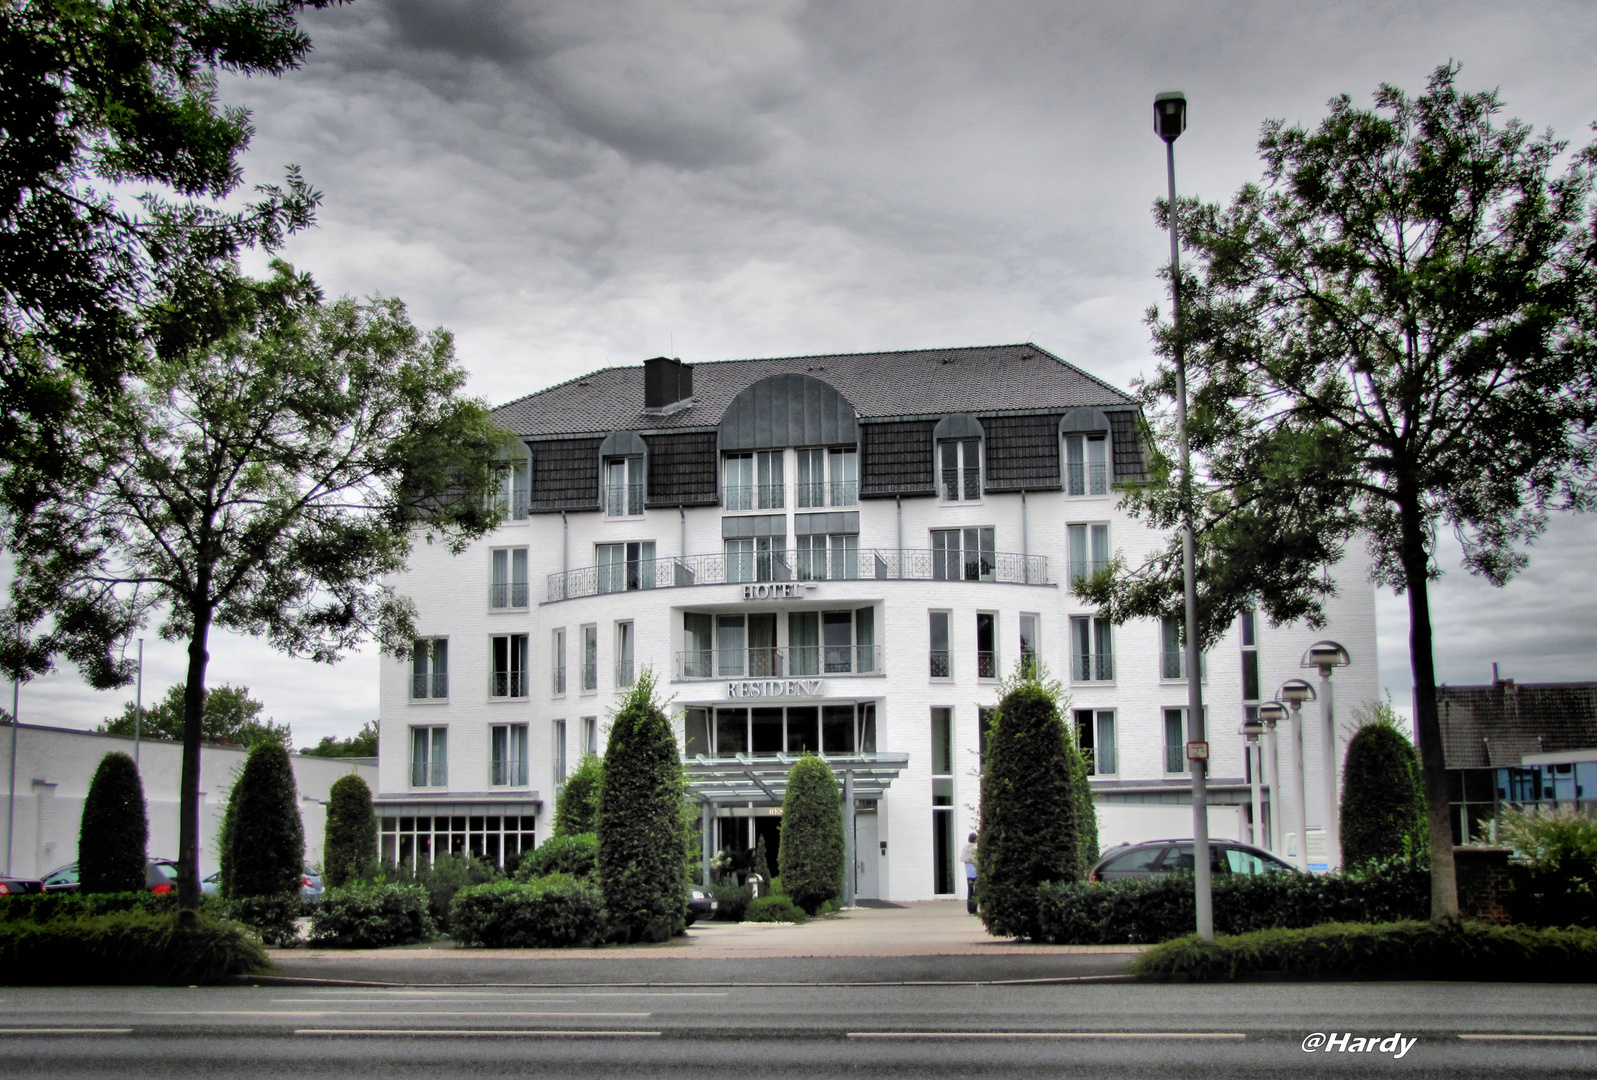 Hotel Residenz in Bocholt!